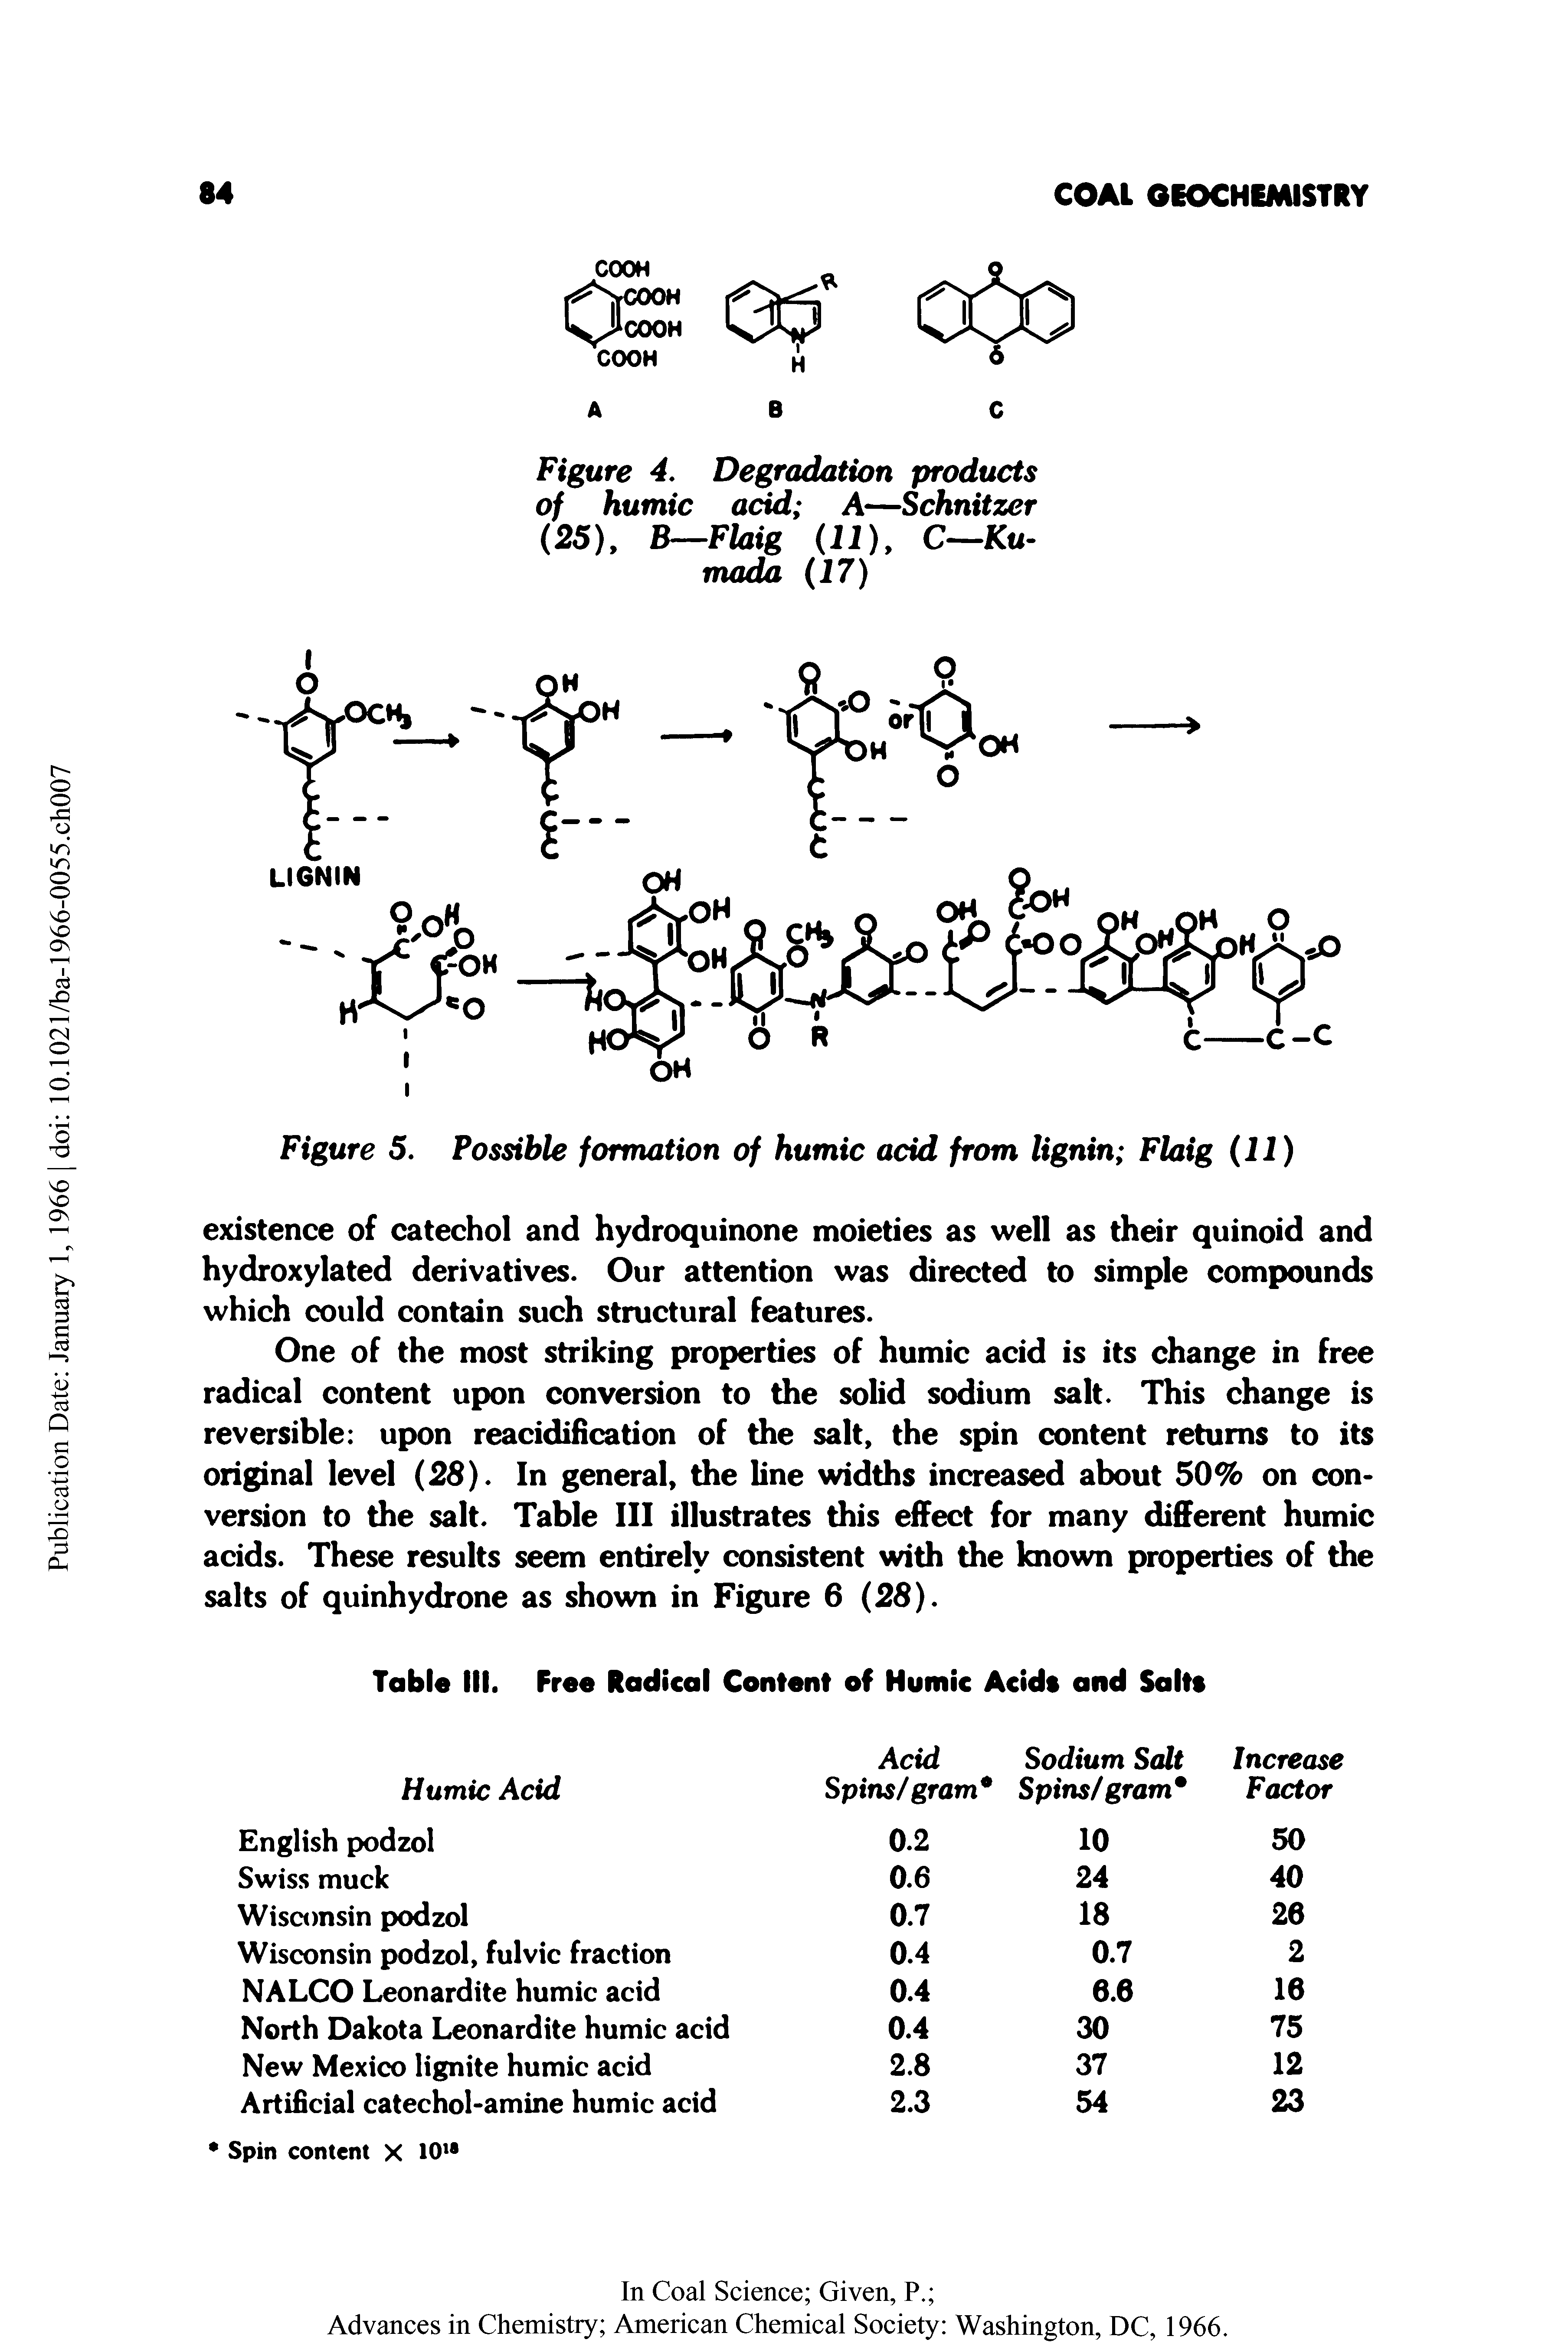 Figure 4. Degradation products of humic acid A—Schnitzer (25), B—Flaig (il), C-Ku-mada (17)...